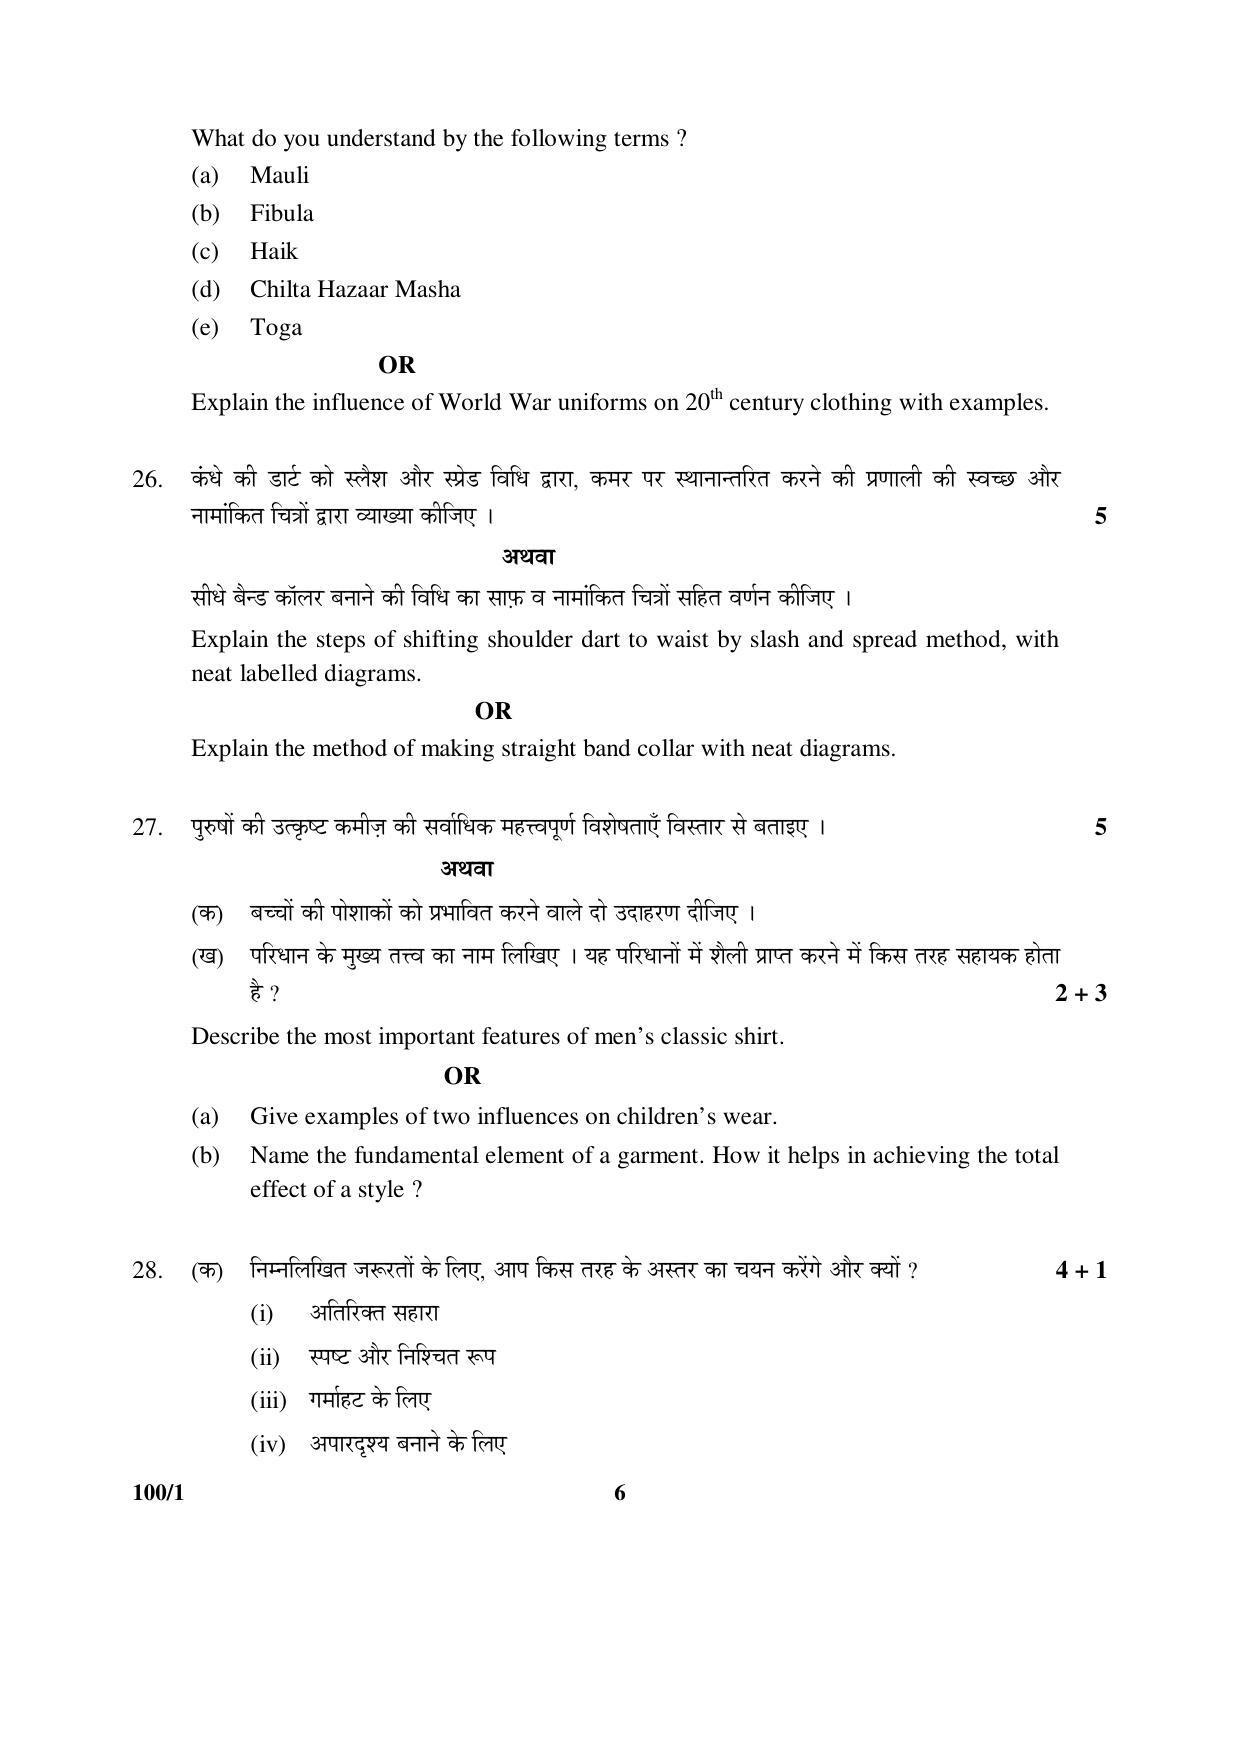 CBSE Class 12 100-1 FASHION STUDIES 2016 Question Paper - Page 6